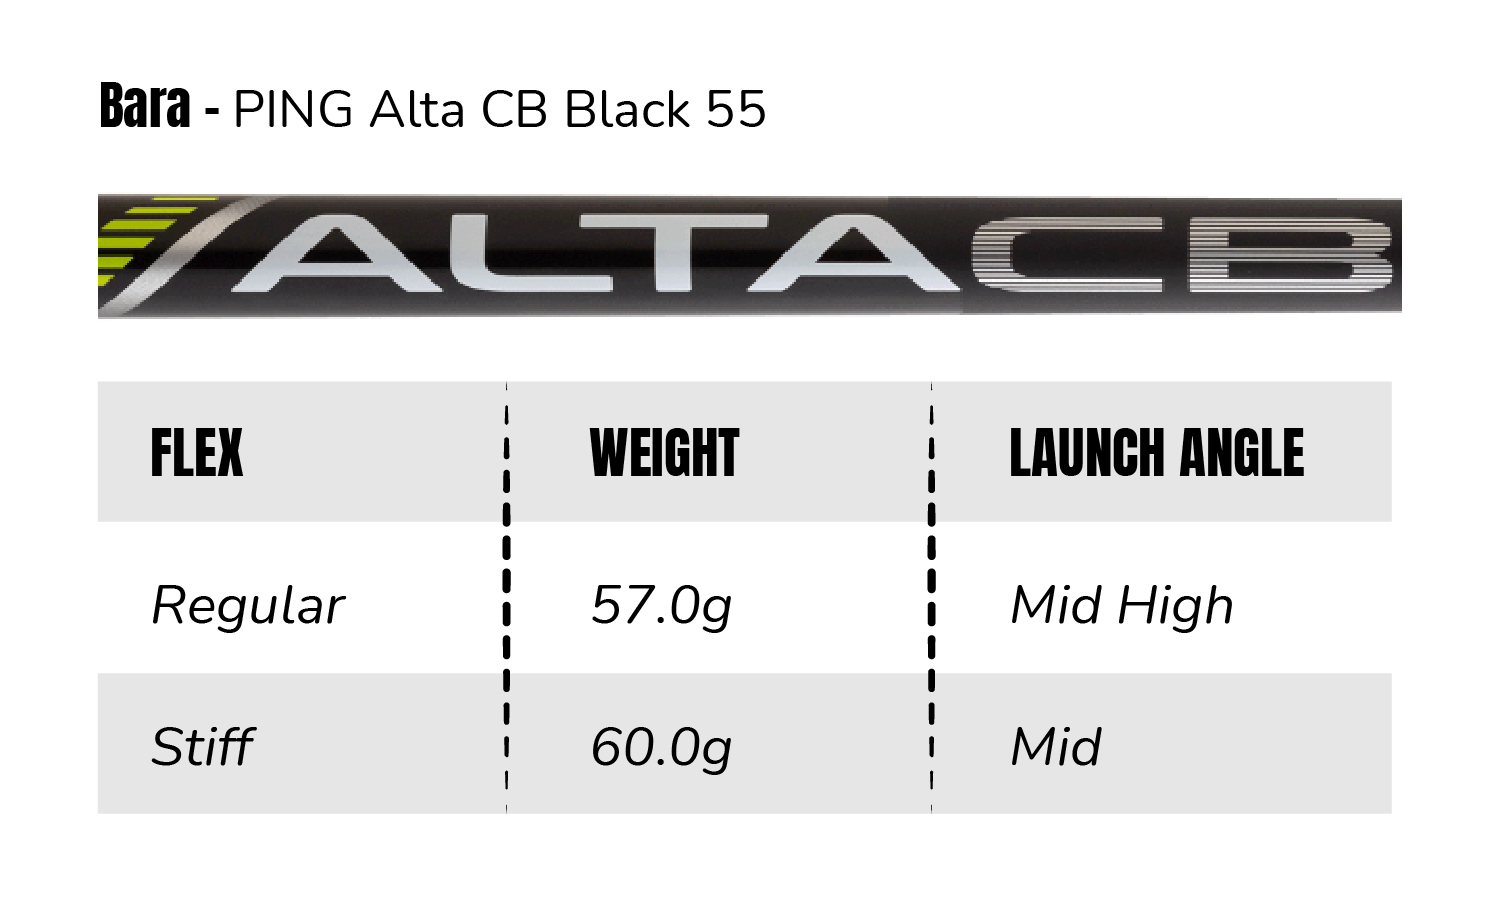 Bara Ping Alta CB Black 55